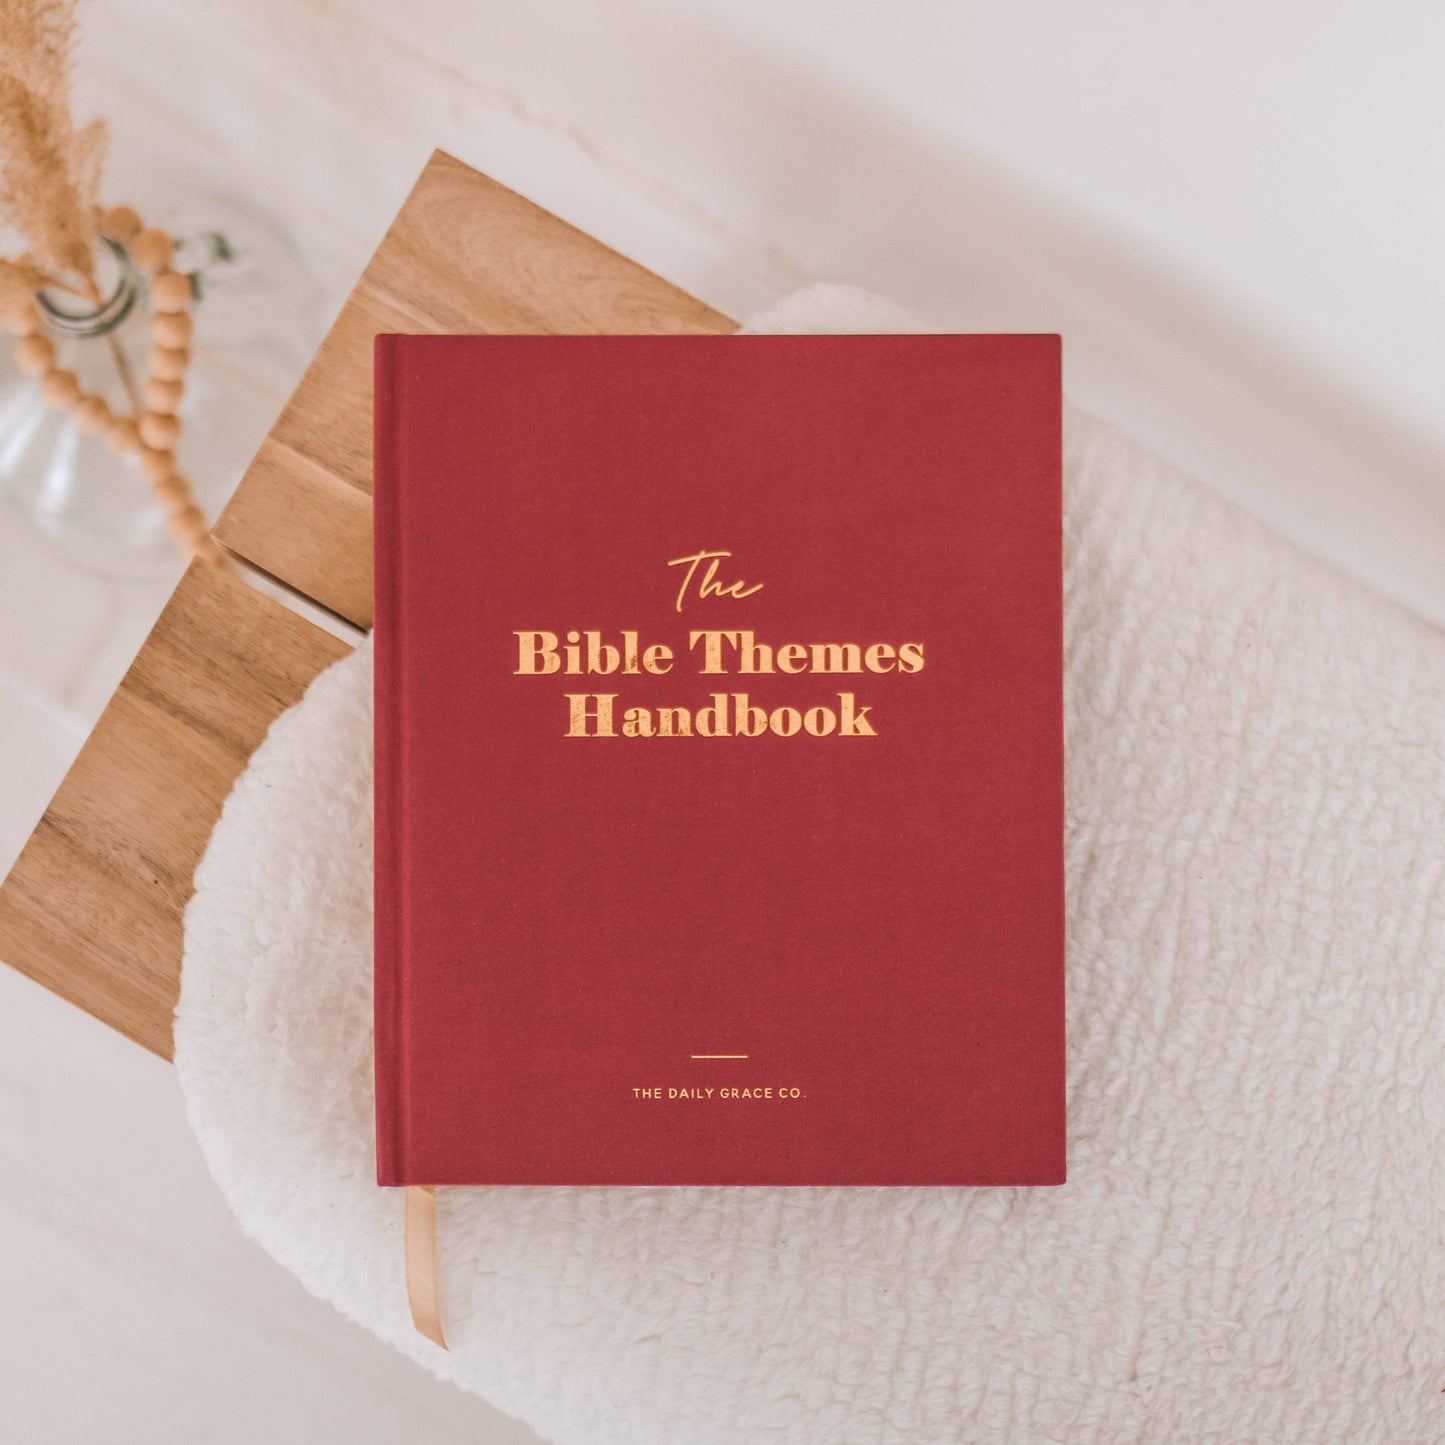 The Bible Themes Handbook